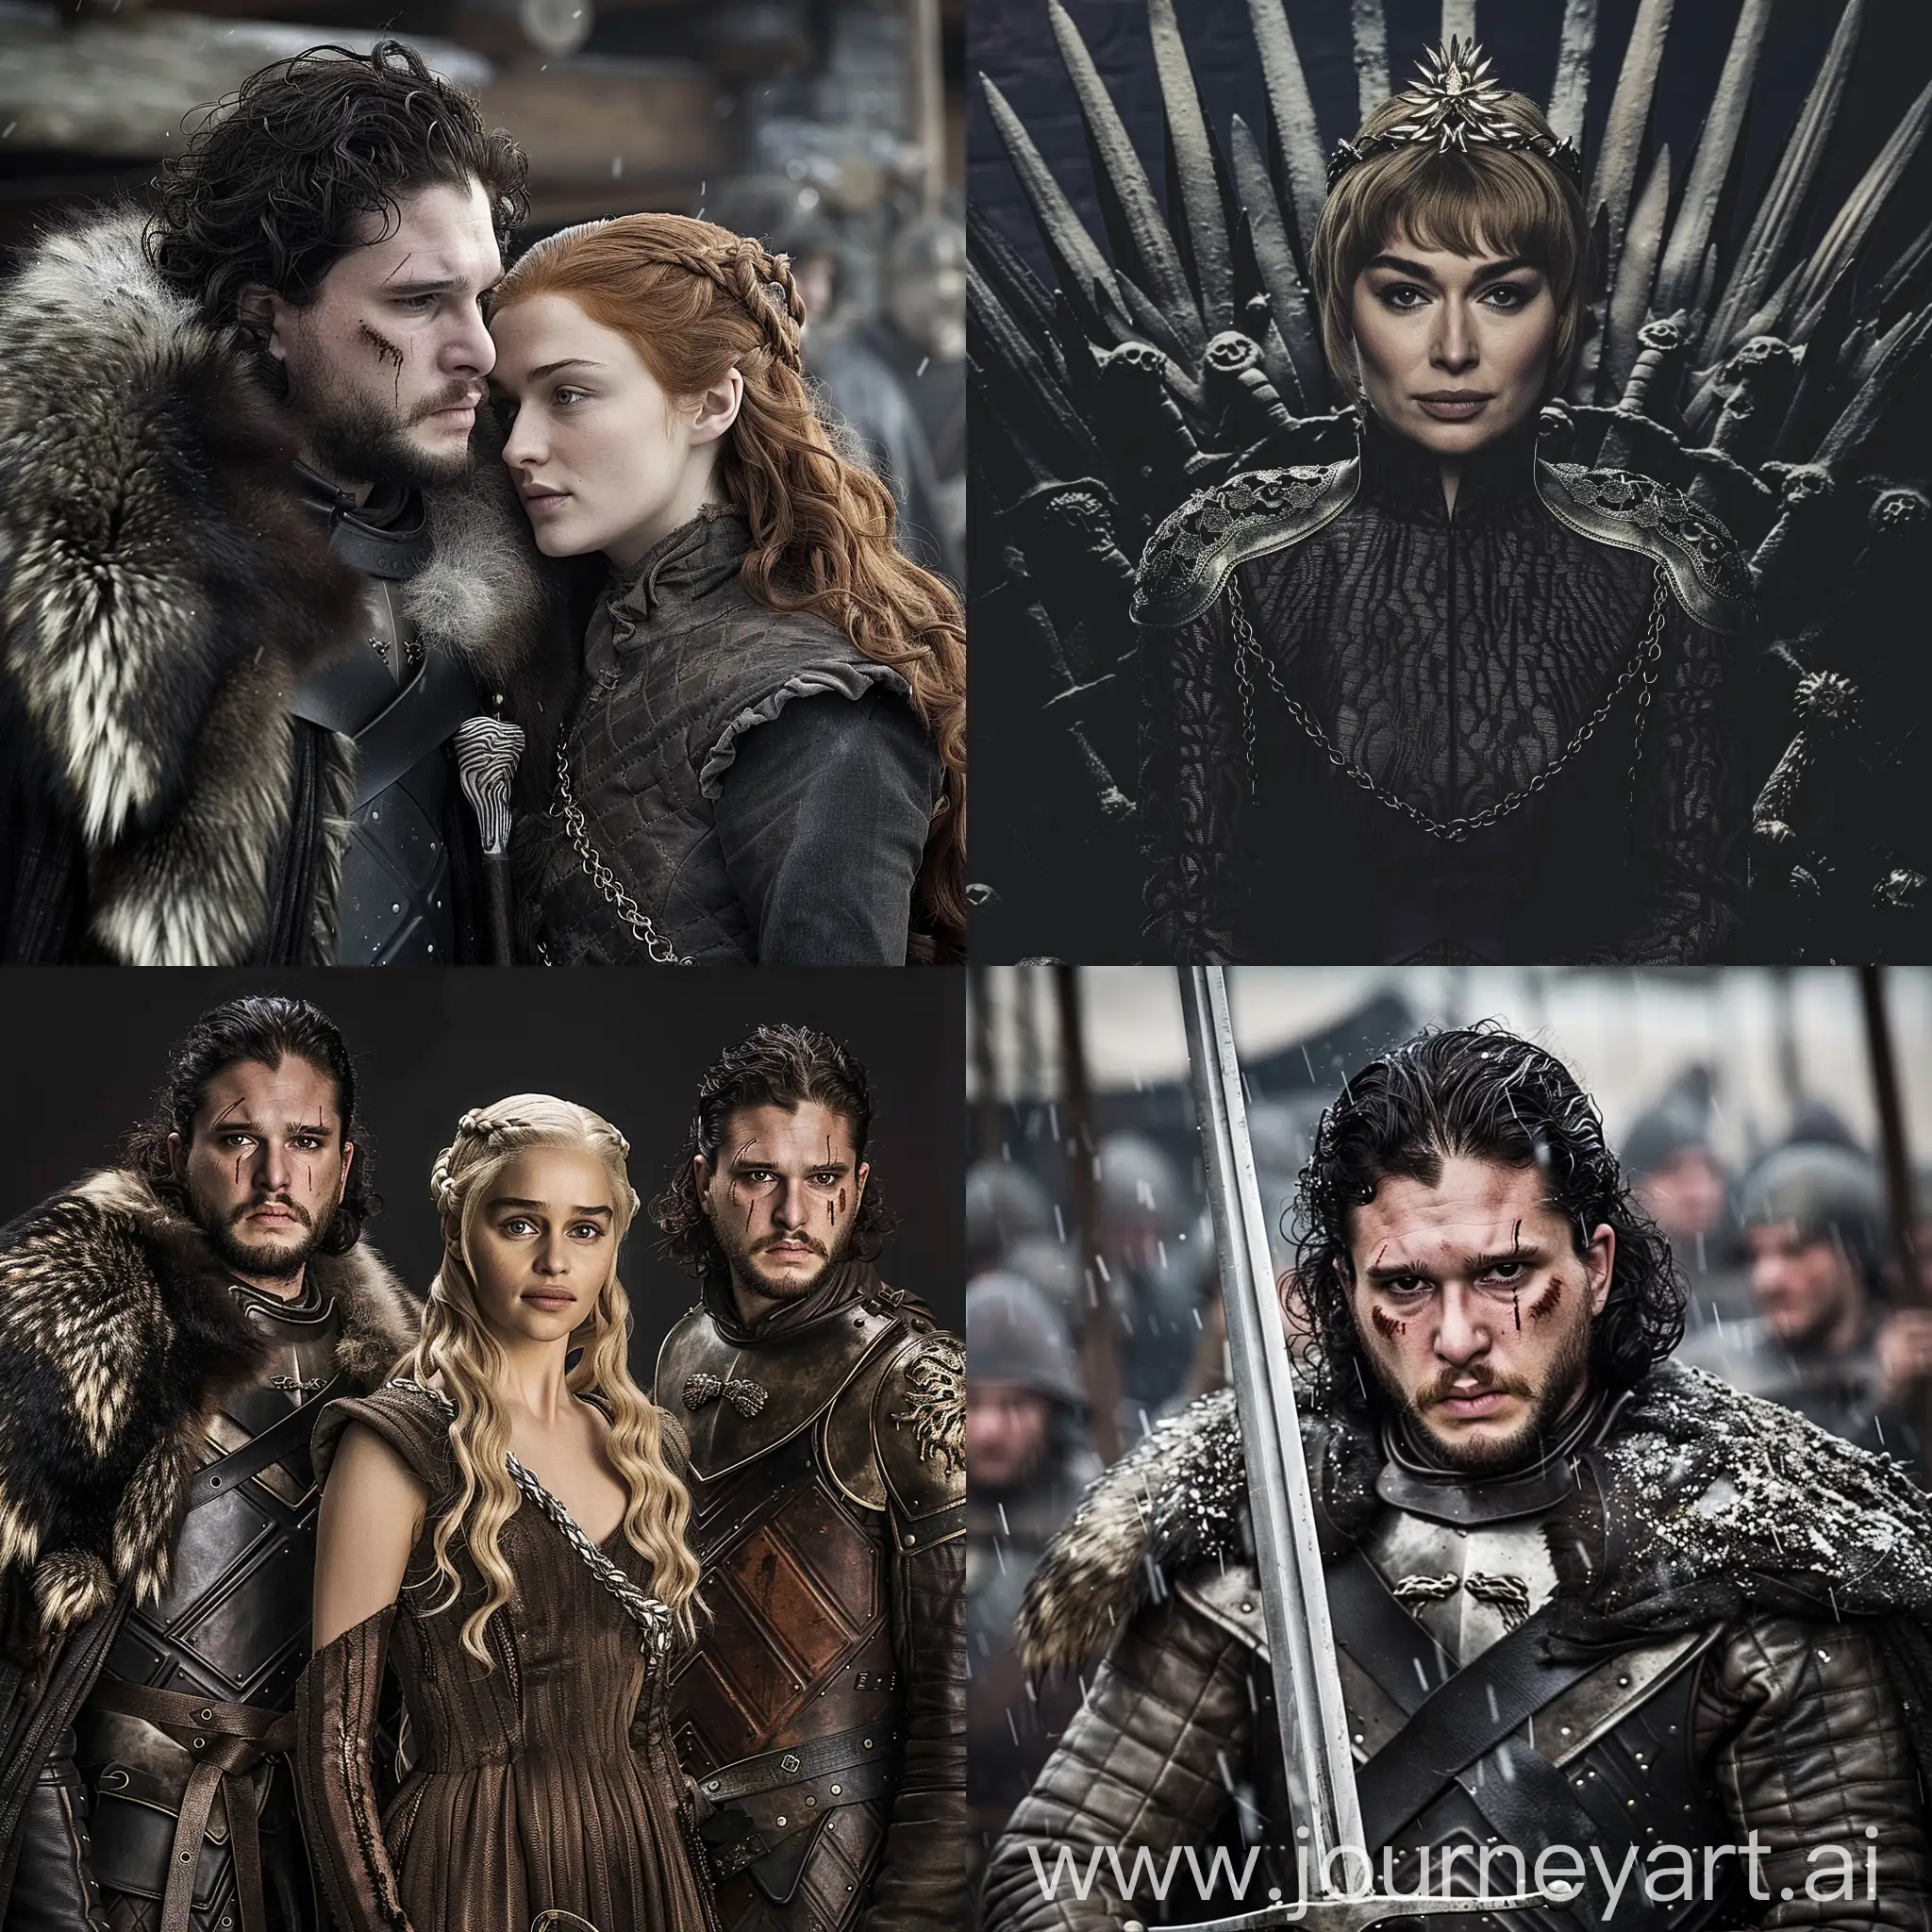 Epic-Fantasy-Battle-Scene-Game-of-Thrones-Tribute-Art